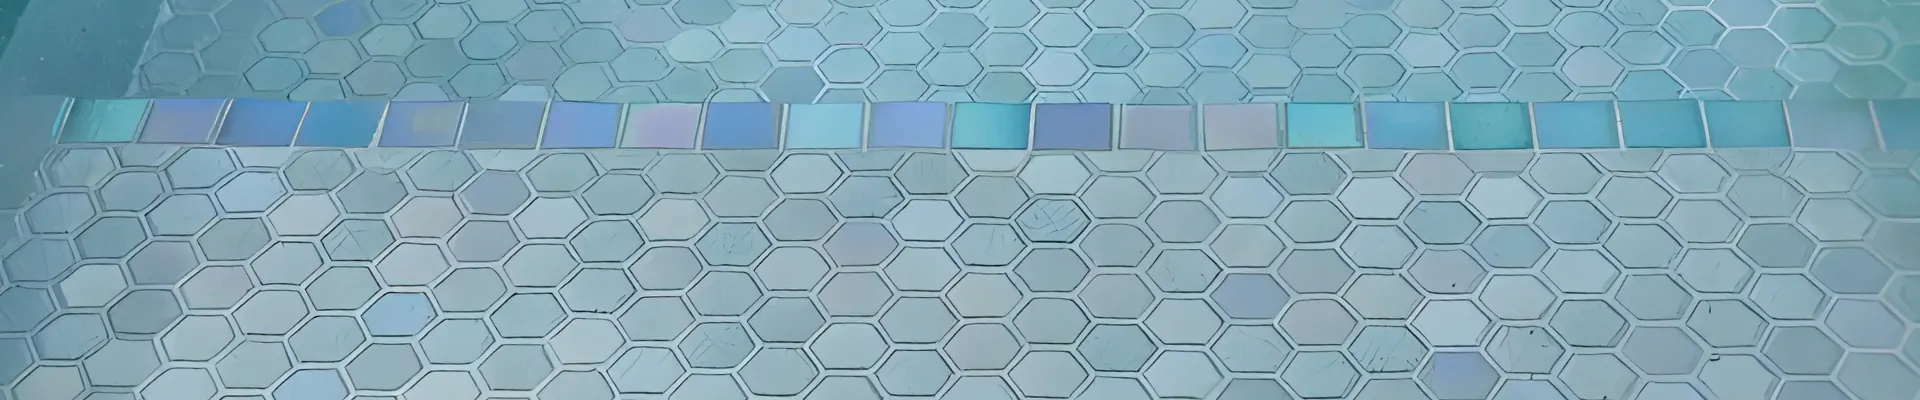 gresite hexagonal para piscina